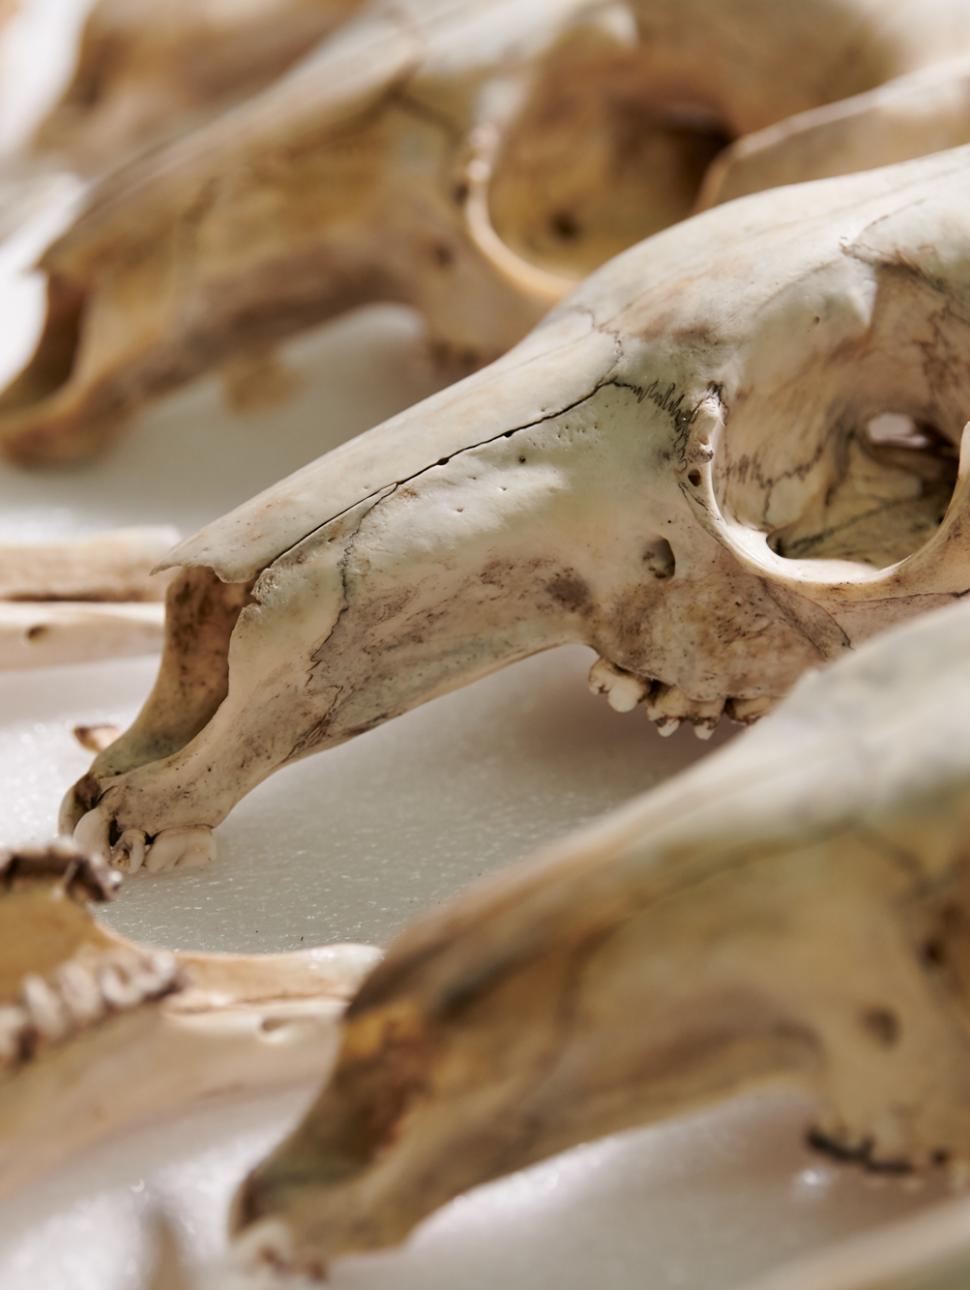 A set of taxonomic skull specimens